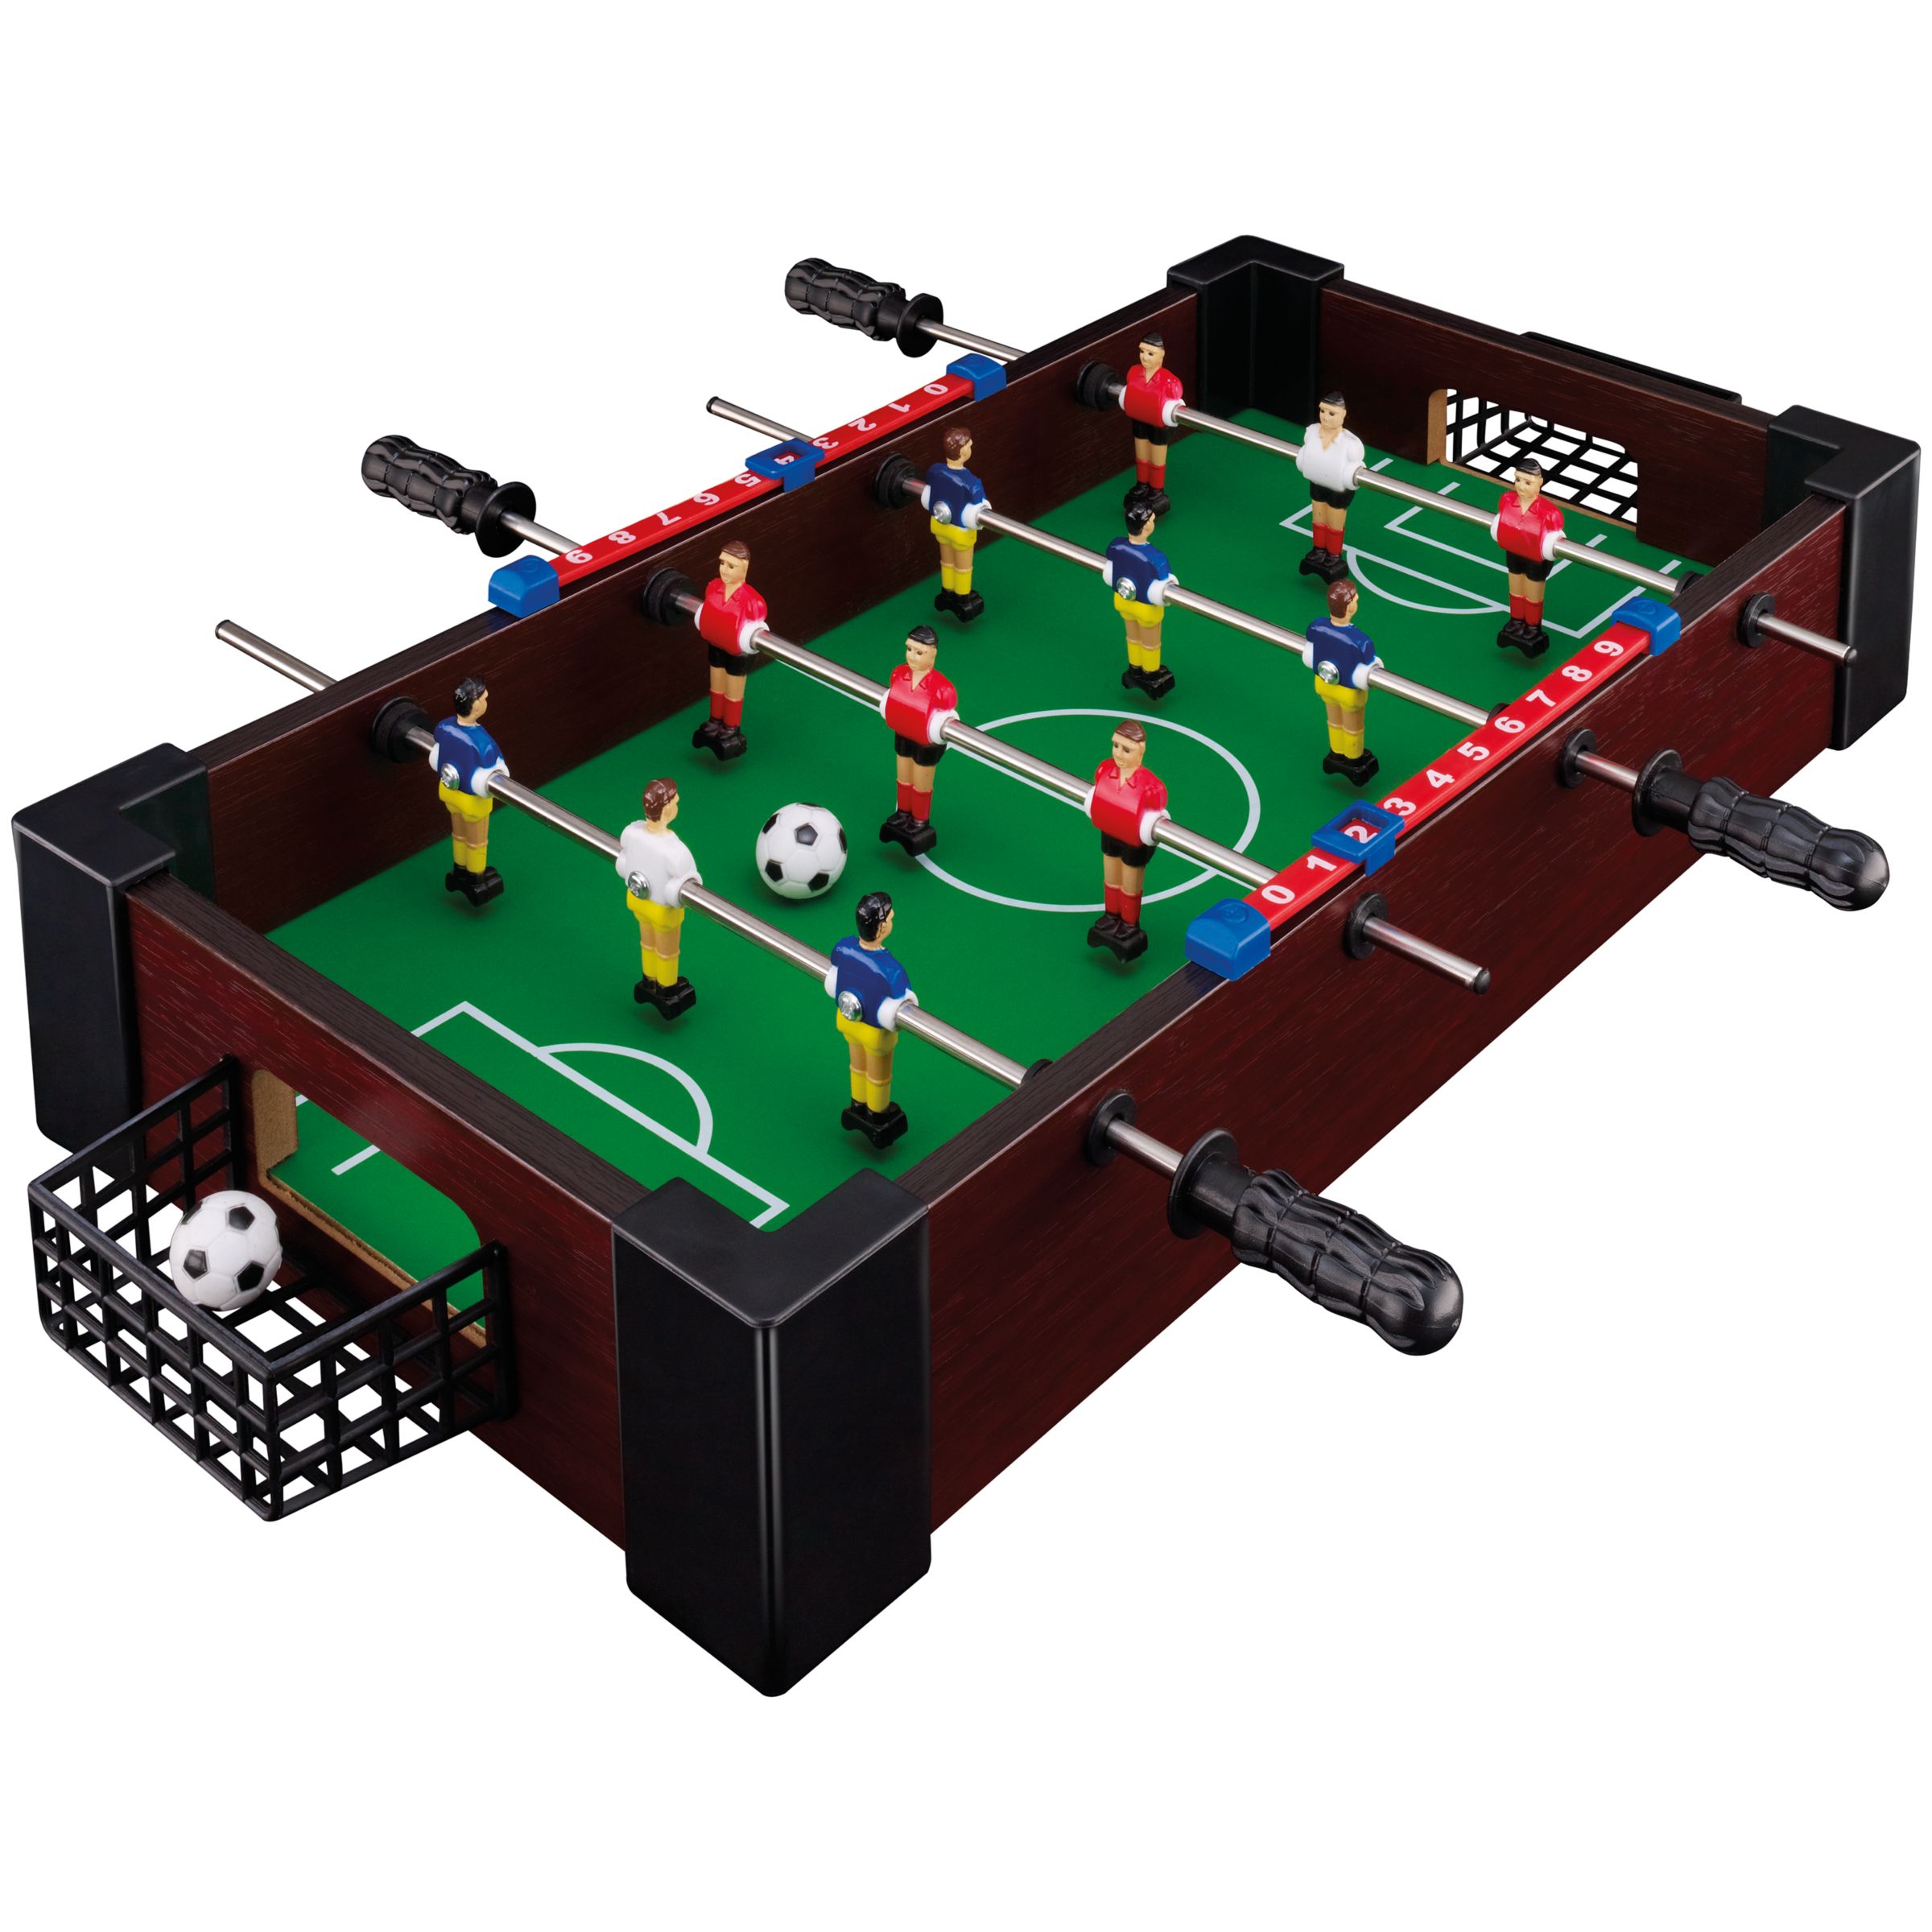 Buy John Lewis Desktop Mini Football Table Online at johnlewis.com